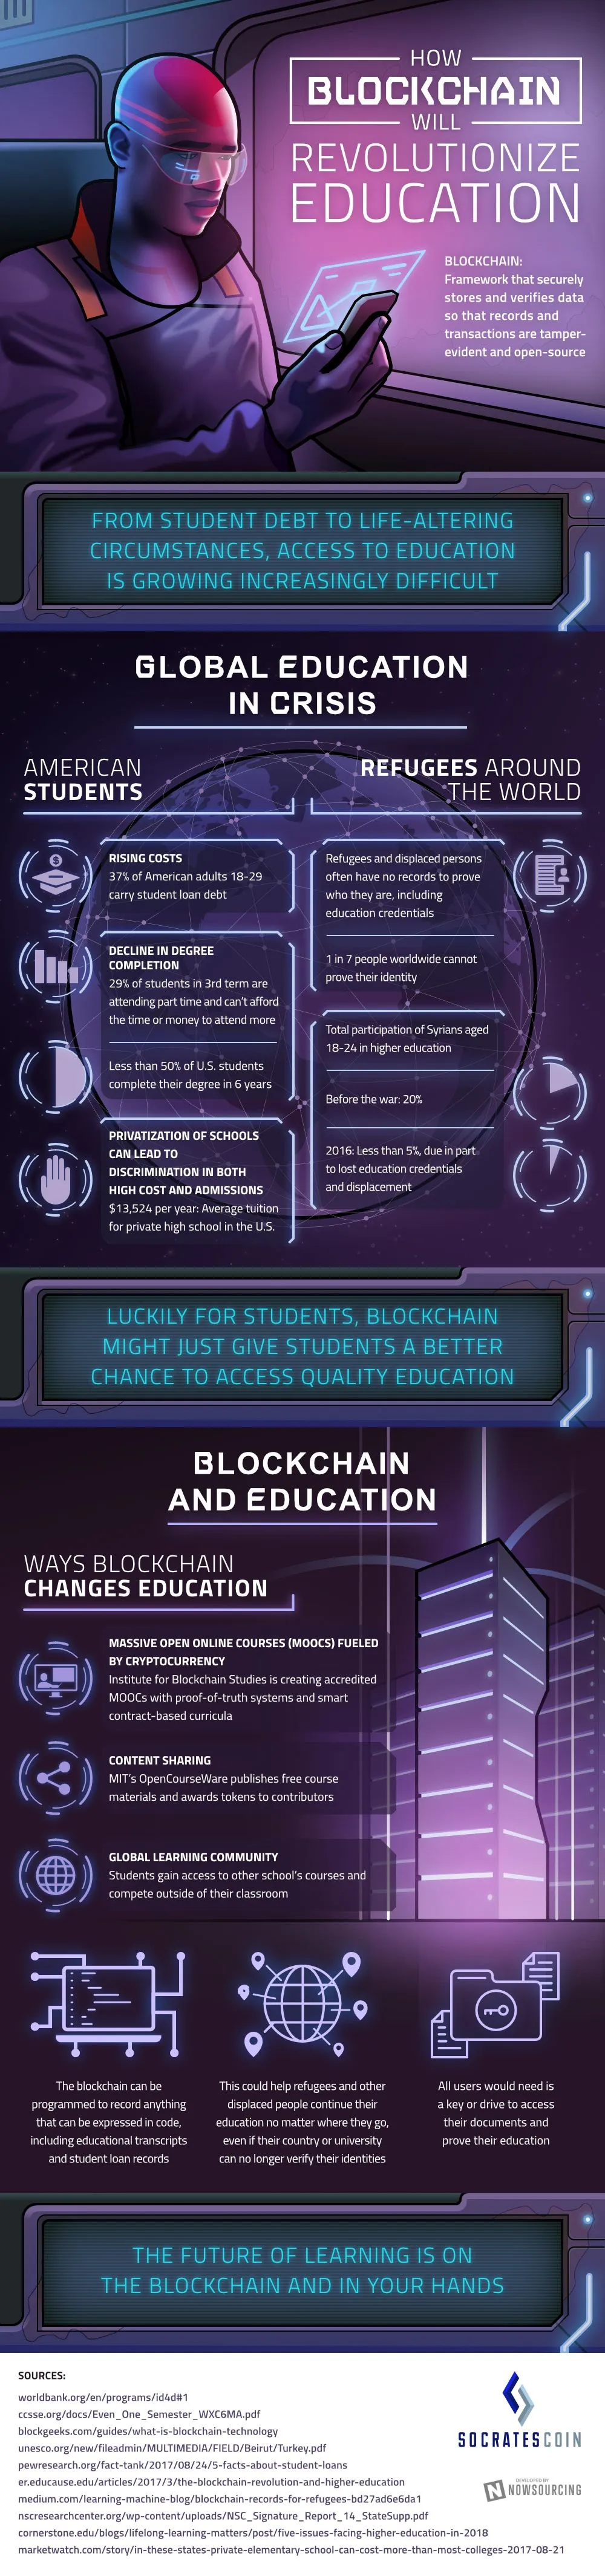 How blockchain will revolutionize education - #infographic